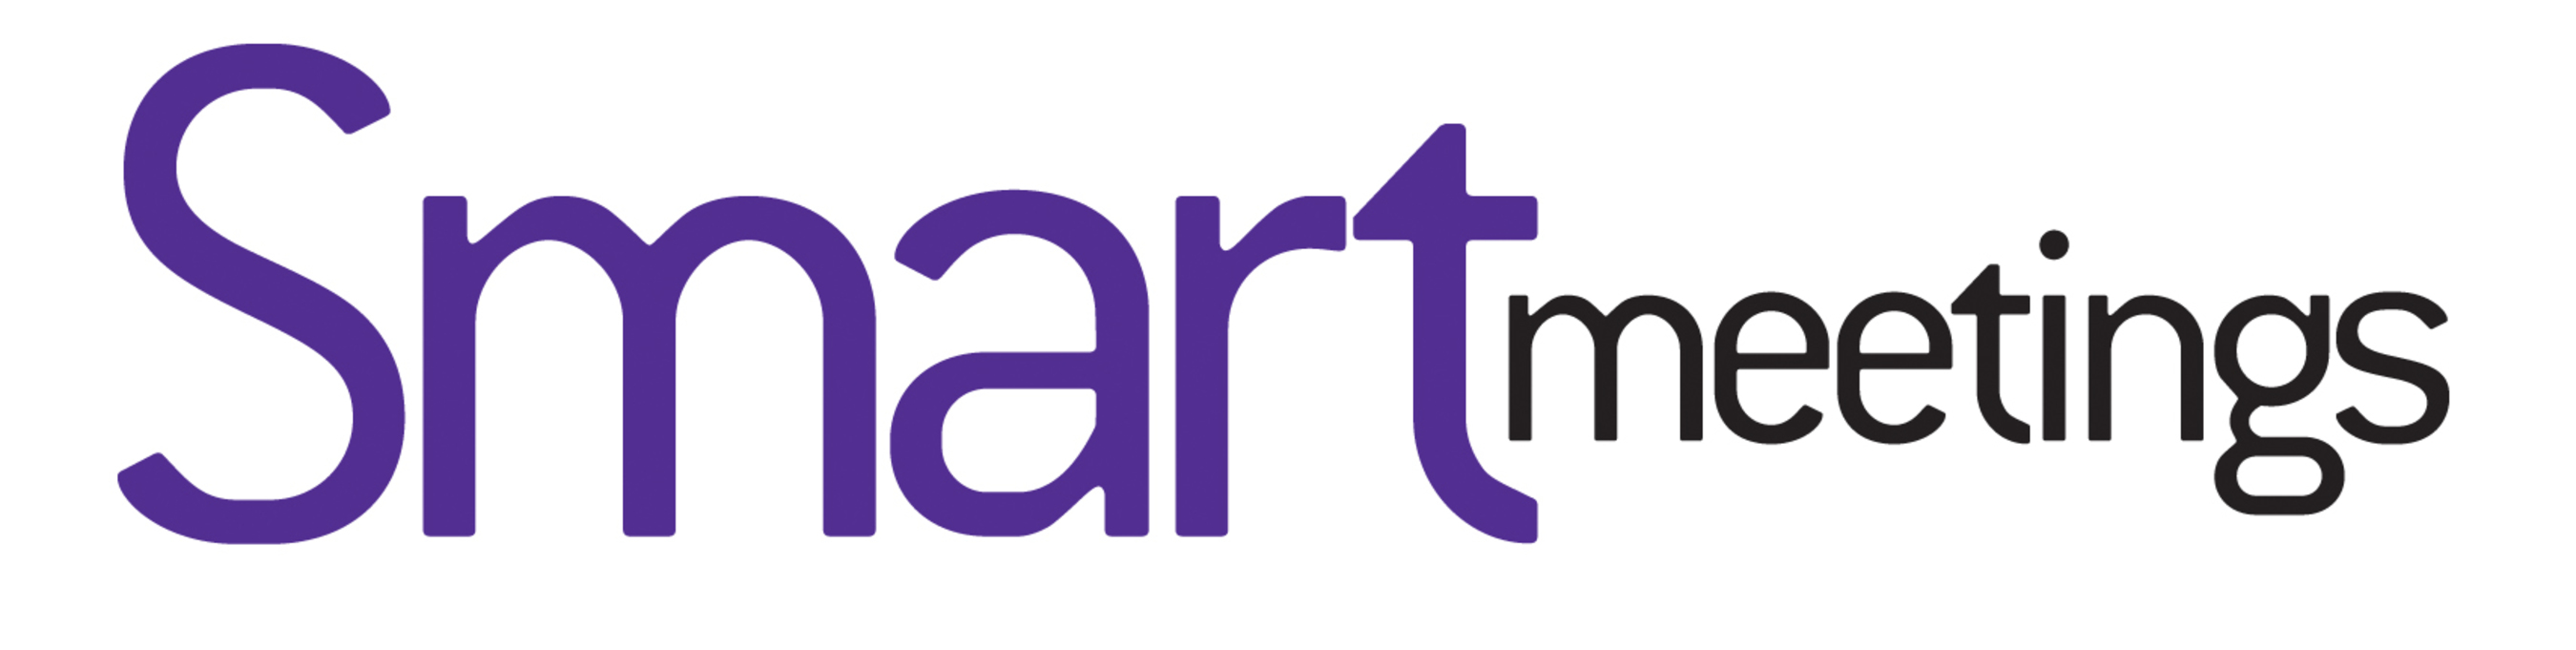 Smart Meetings logo.